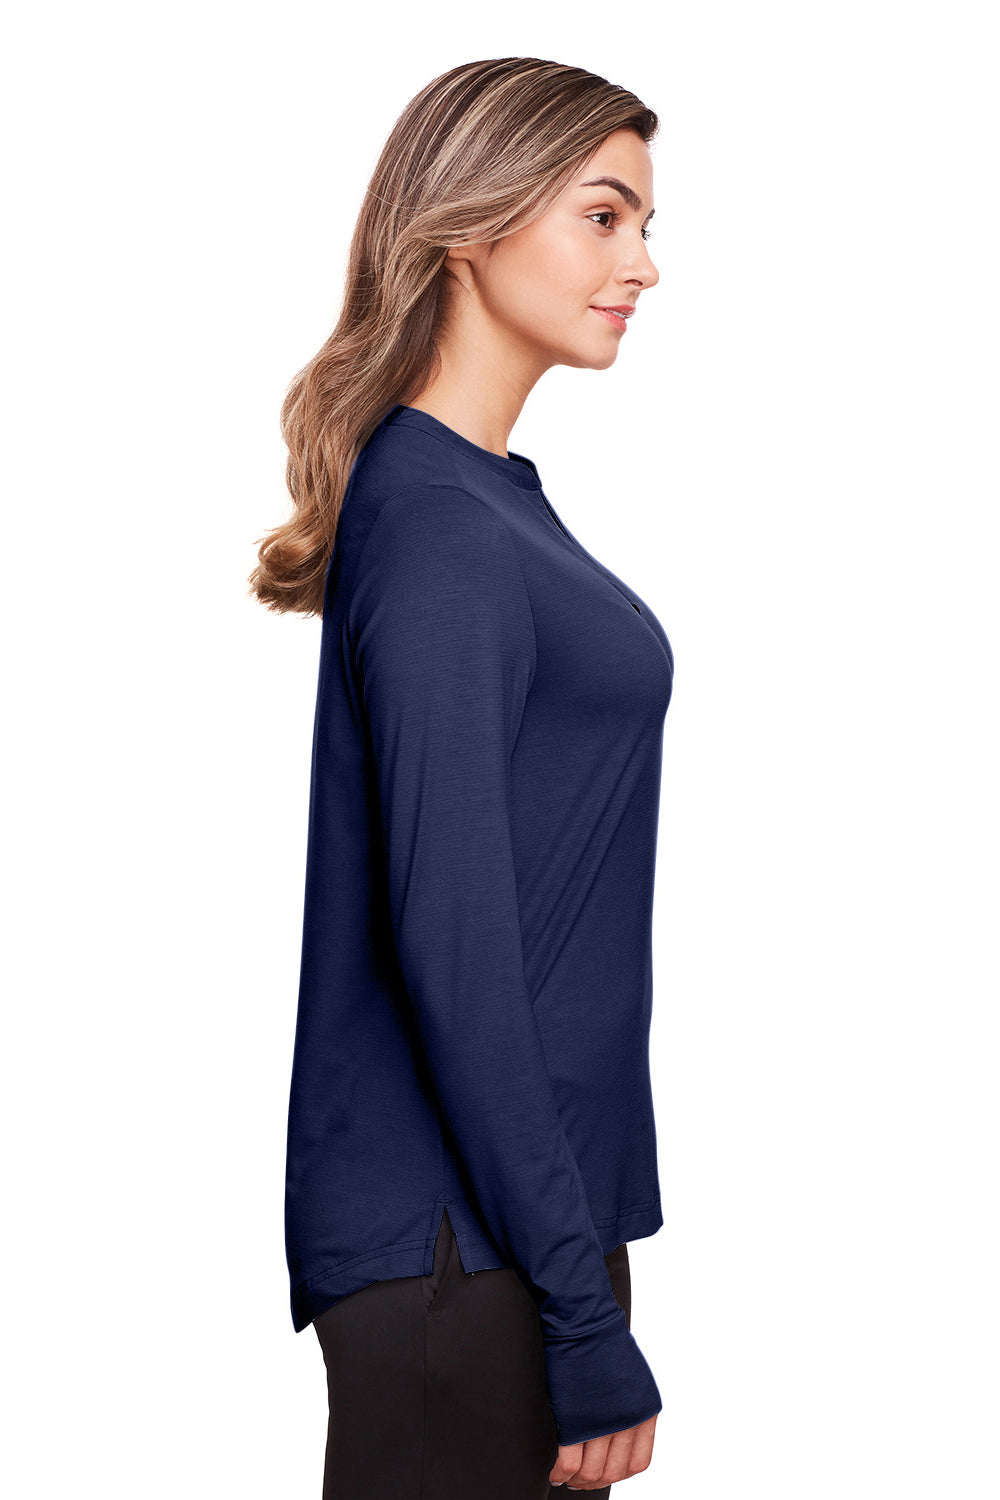 North End NE400W Womens Jaq Performance Moisture Wicking Long Sleeve Polo Shirt Navy Blue Side